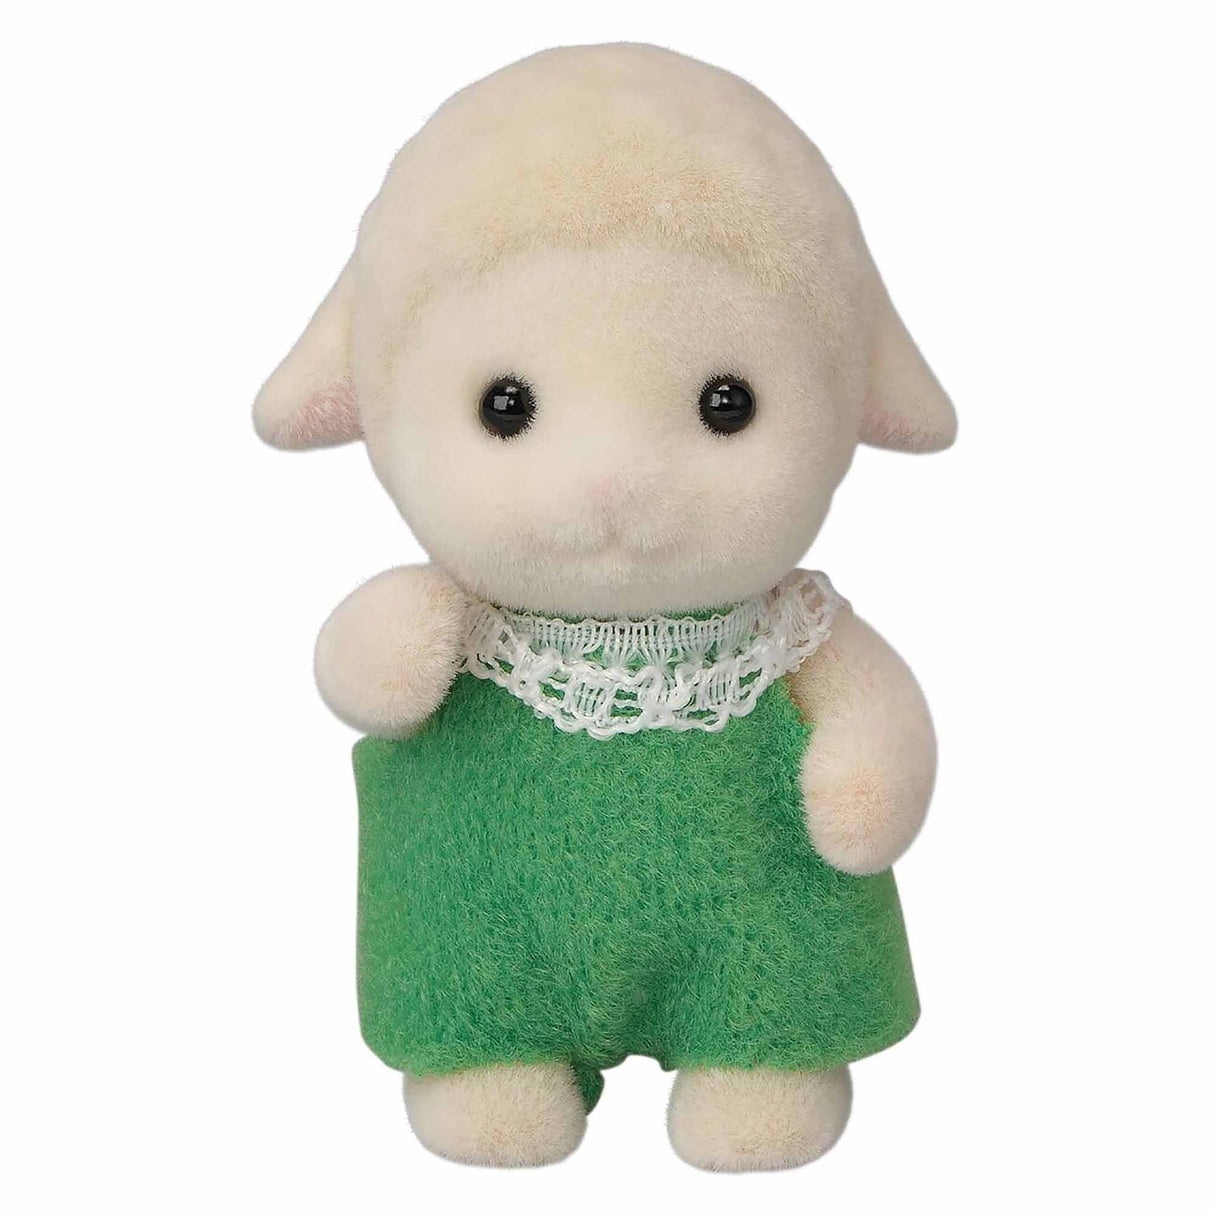 Sylvanian Families - Sheep Baby